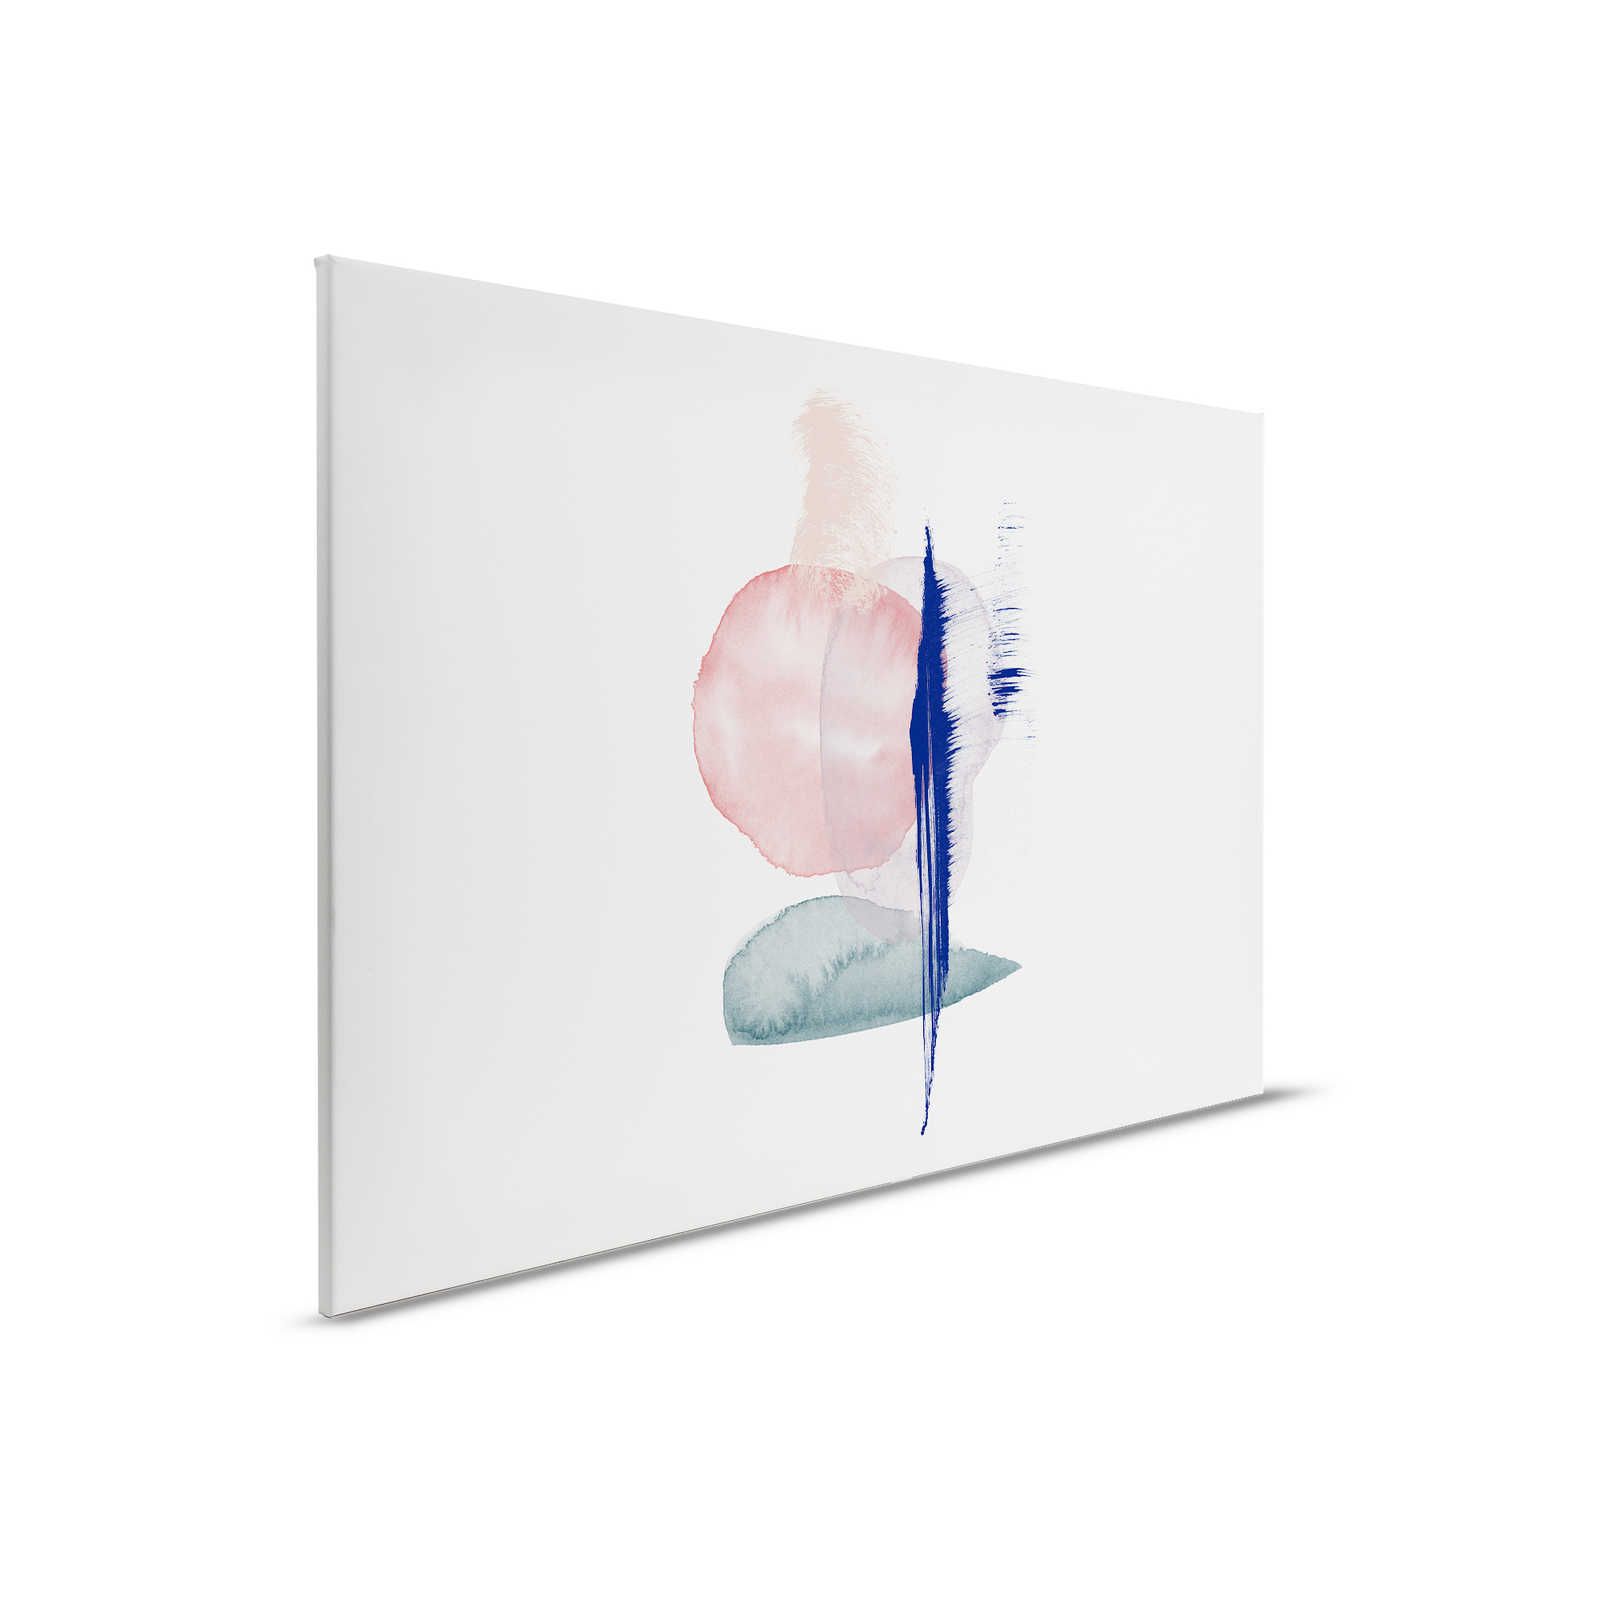         Canvas painting art watercolour minimalist design - 0,90 m x 0,60 m
    